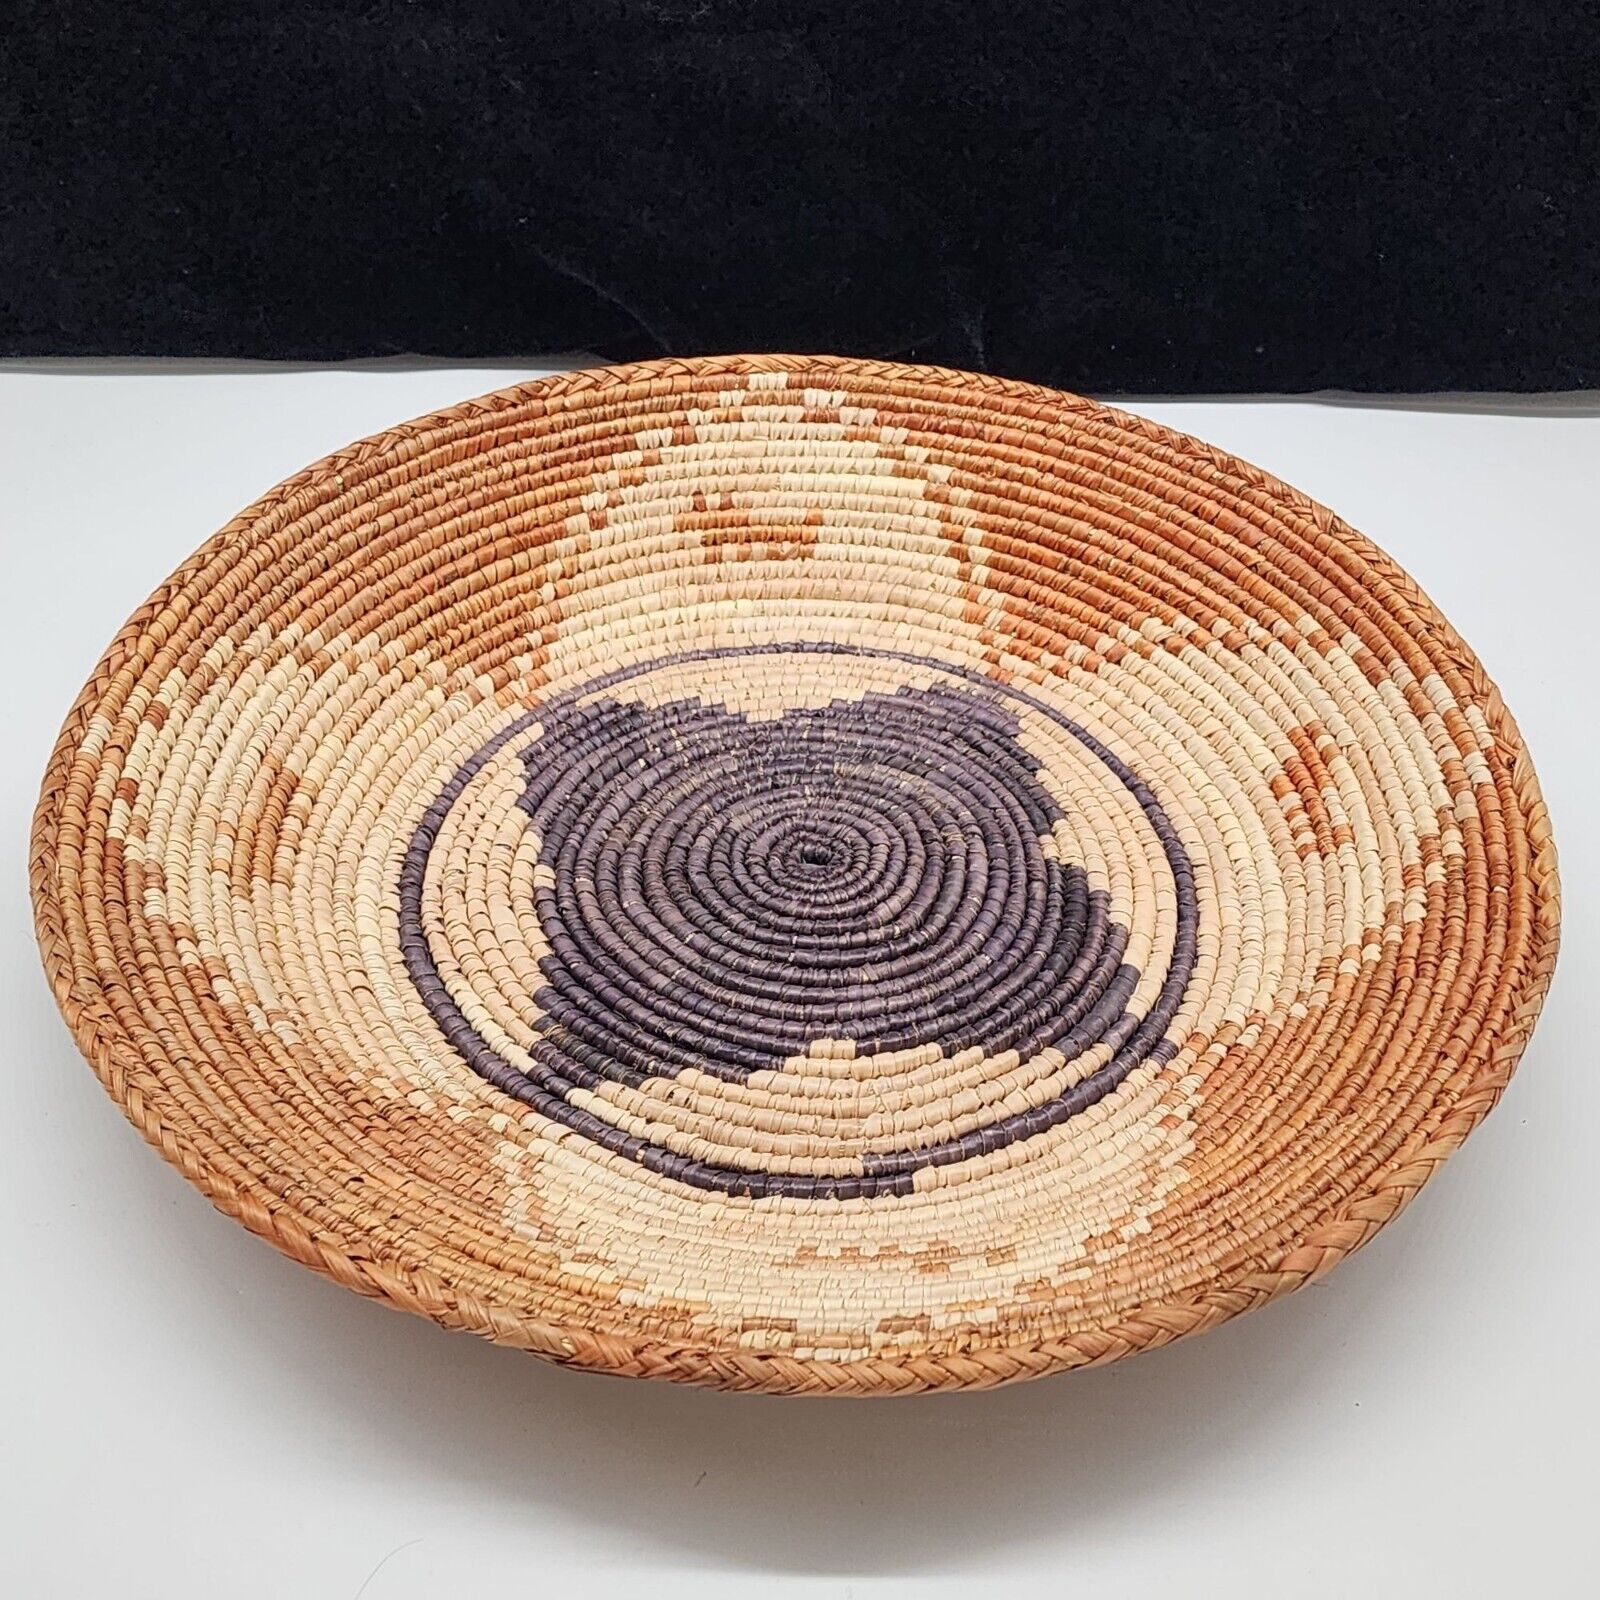 Native American or African Hand Woven Coil Basket Animal Boho Decor 14.5